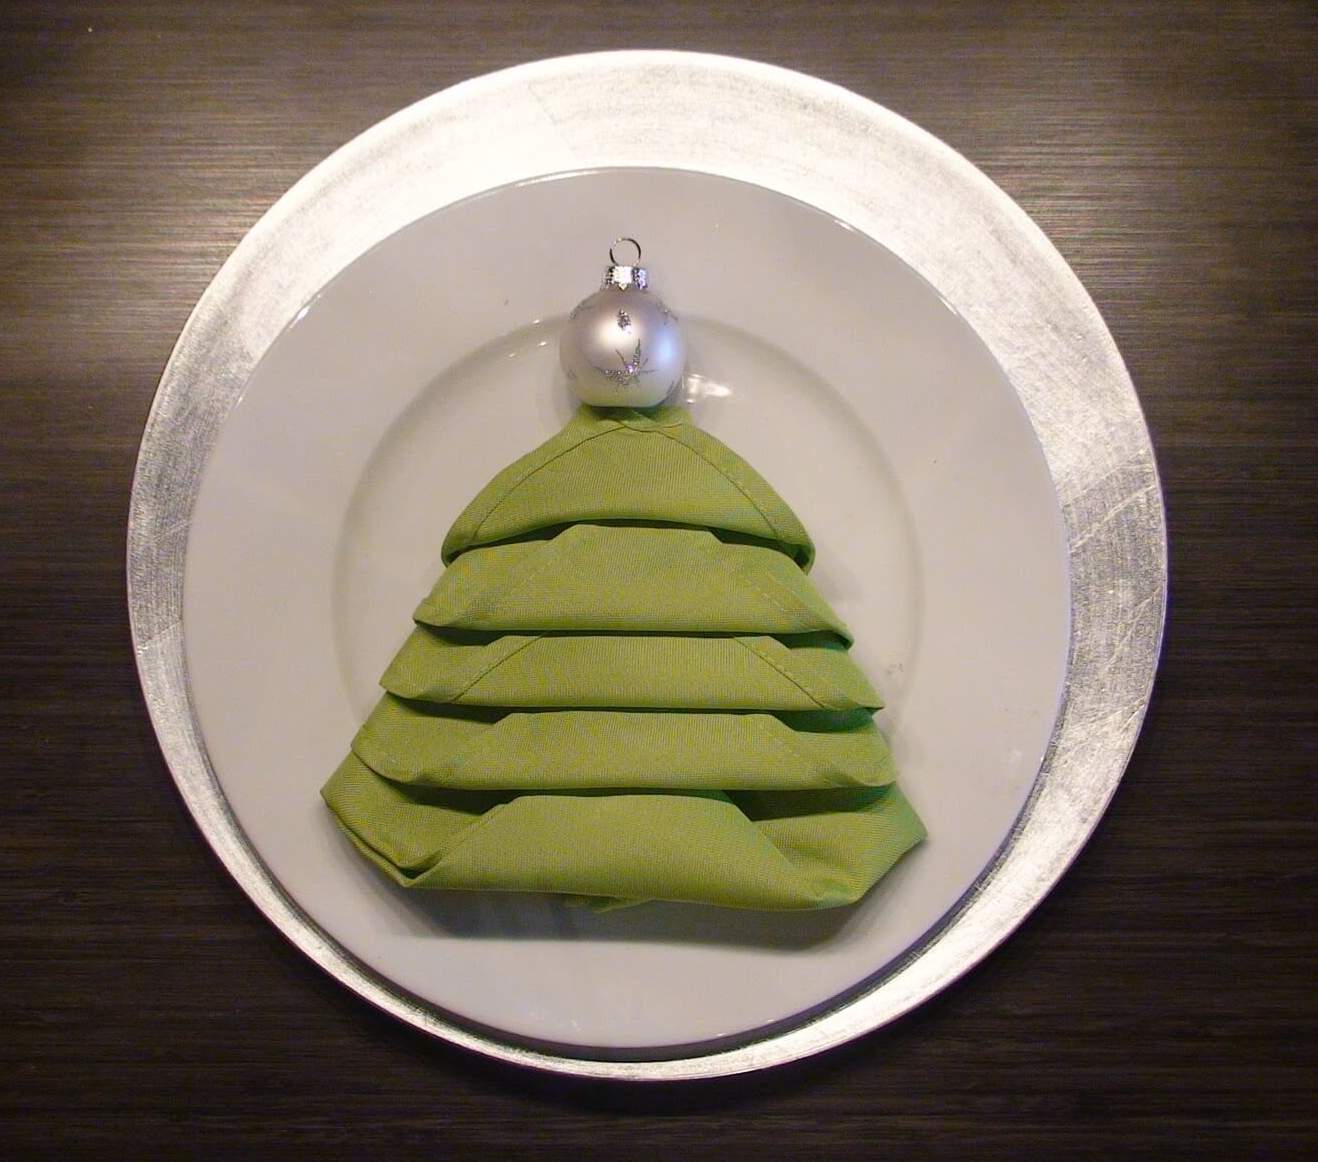 How to Make Christmas Tree Napkin Fold - Step by step (Tutorial)